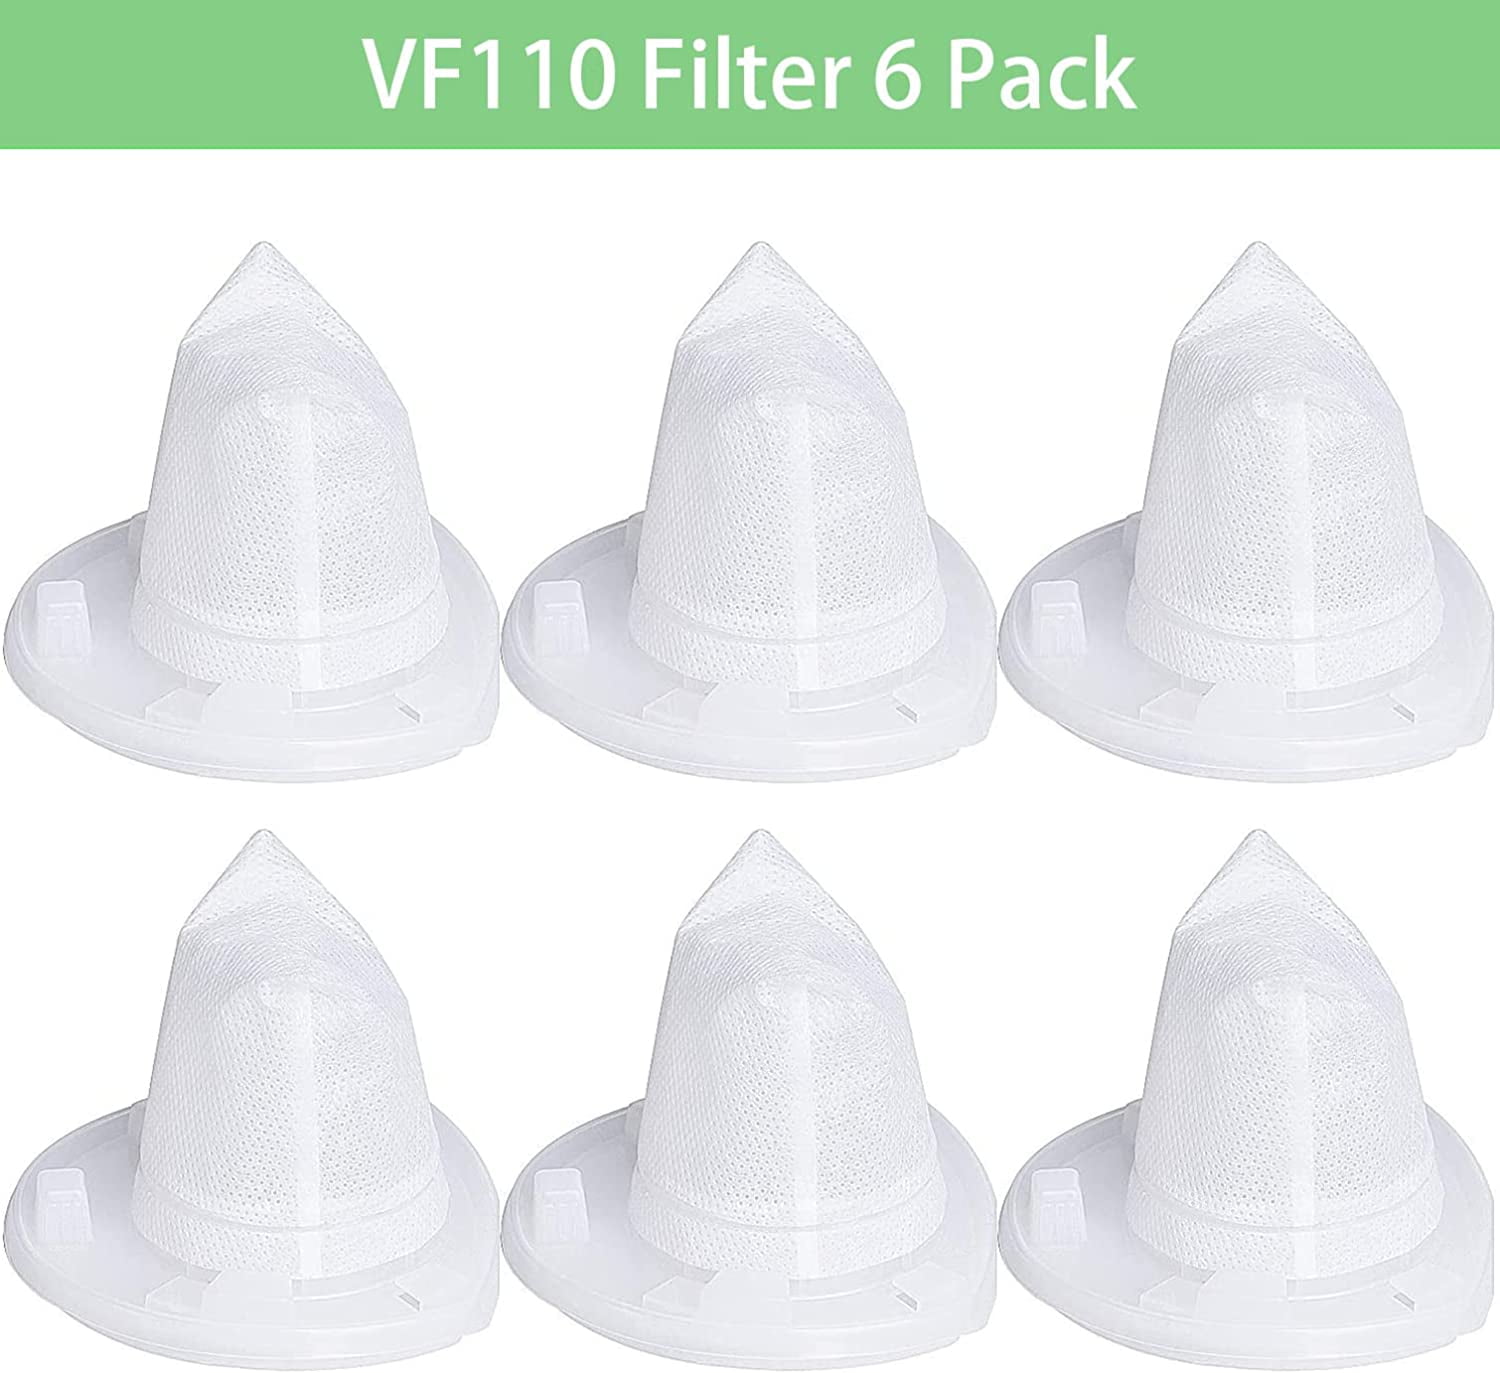  VF110 Filter, 6 Pack Replacement Vacuum Filters for Black &  Decker VF110 Cordless Vacuum CHV1210, CHV1410, CHV1410B, CHV1410L,  CHV1410L32, CHV1510, CHV9610, BDH2000L, 90558113-01 : Home & Kitchen